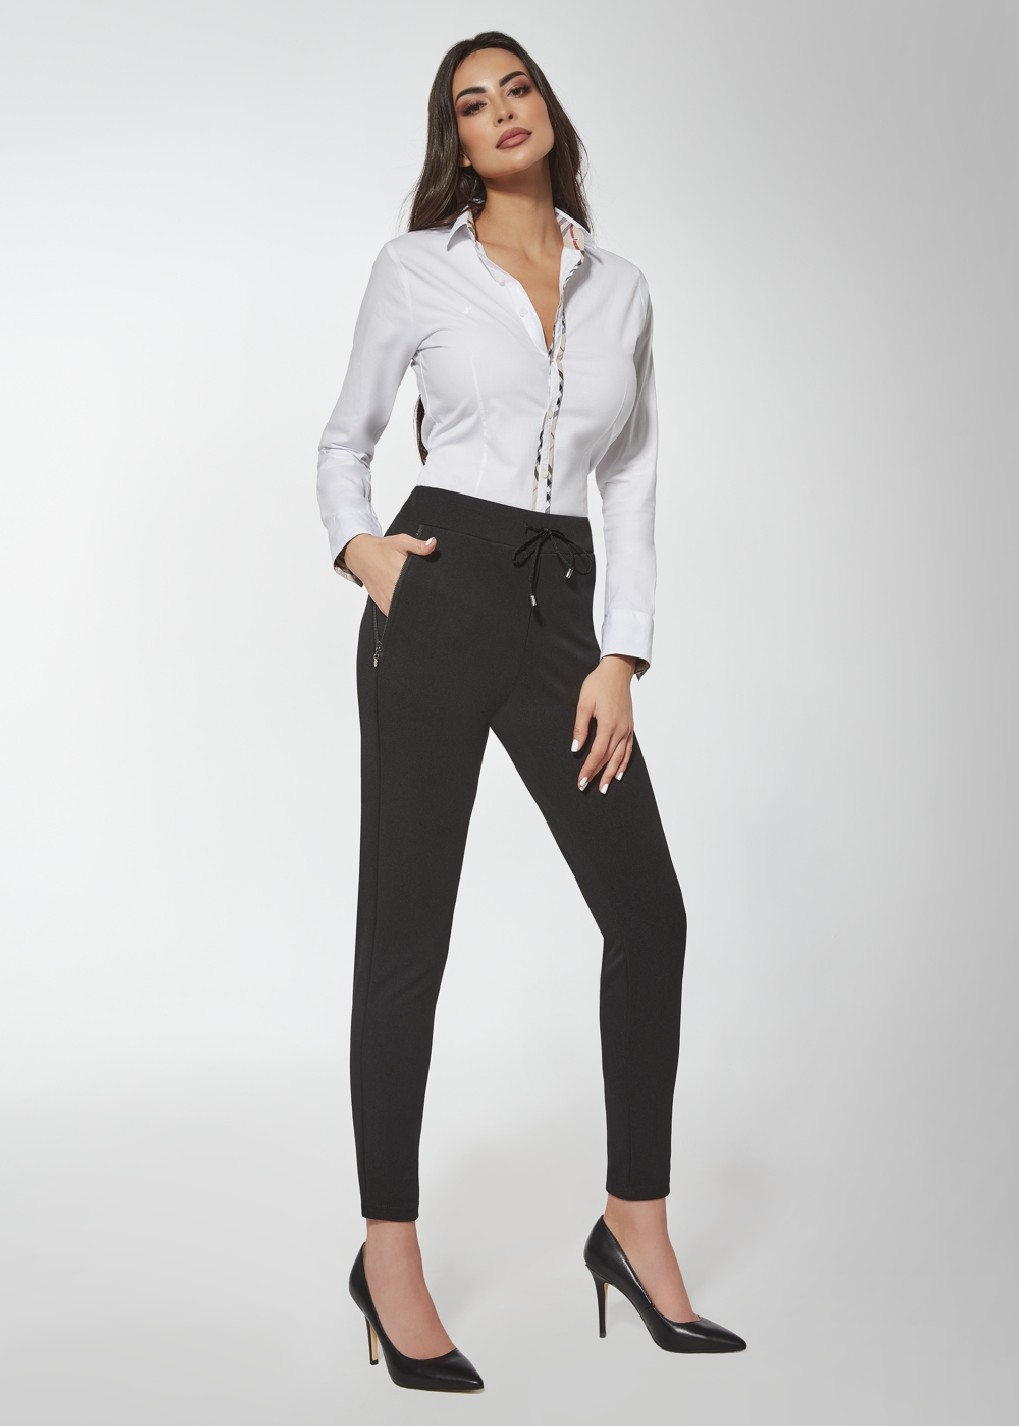 Bas Bleu Women's trousers IDALIA elegant with zippered pockets